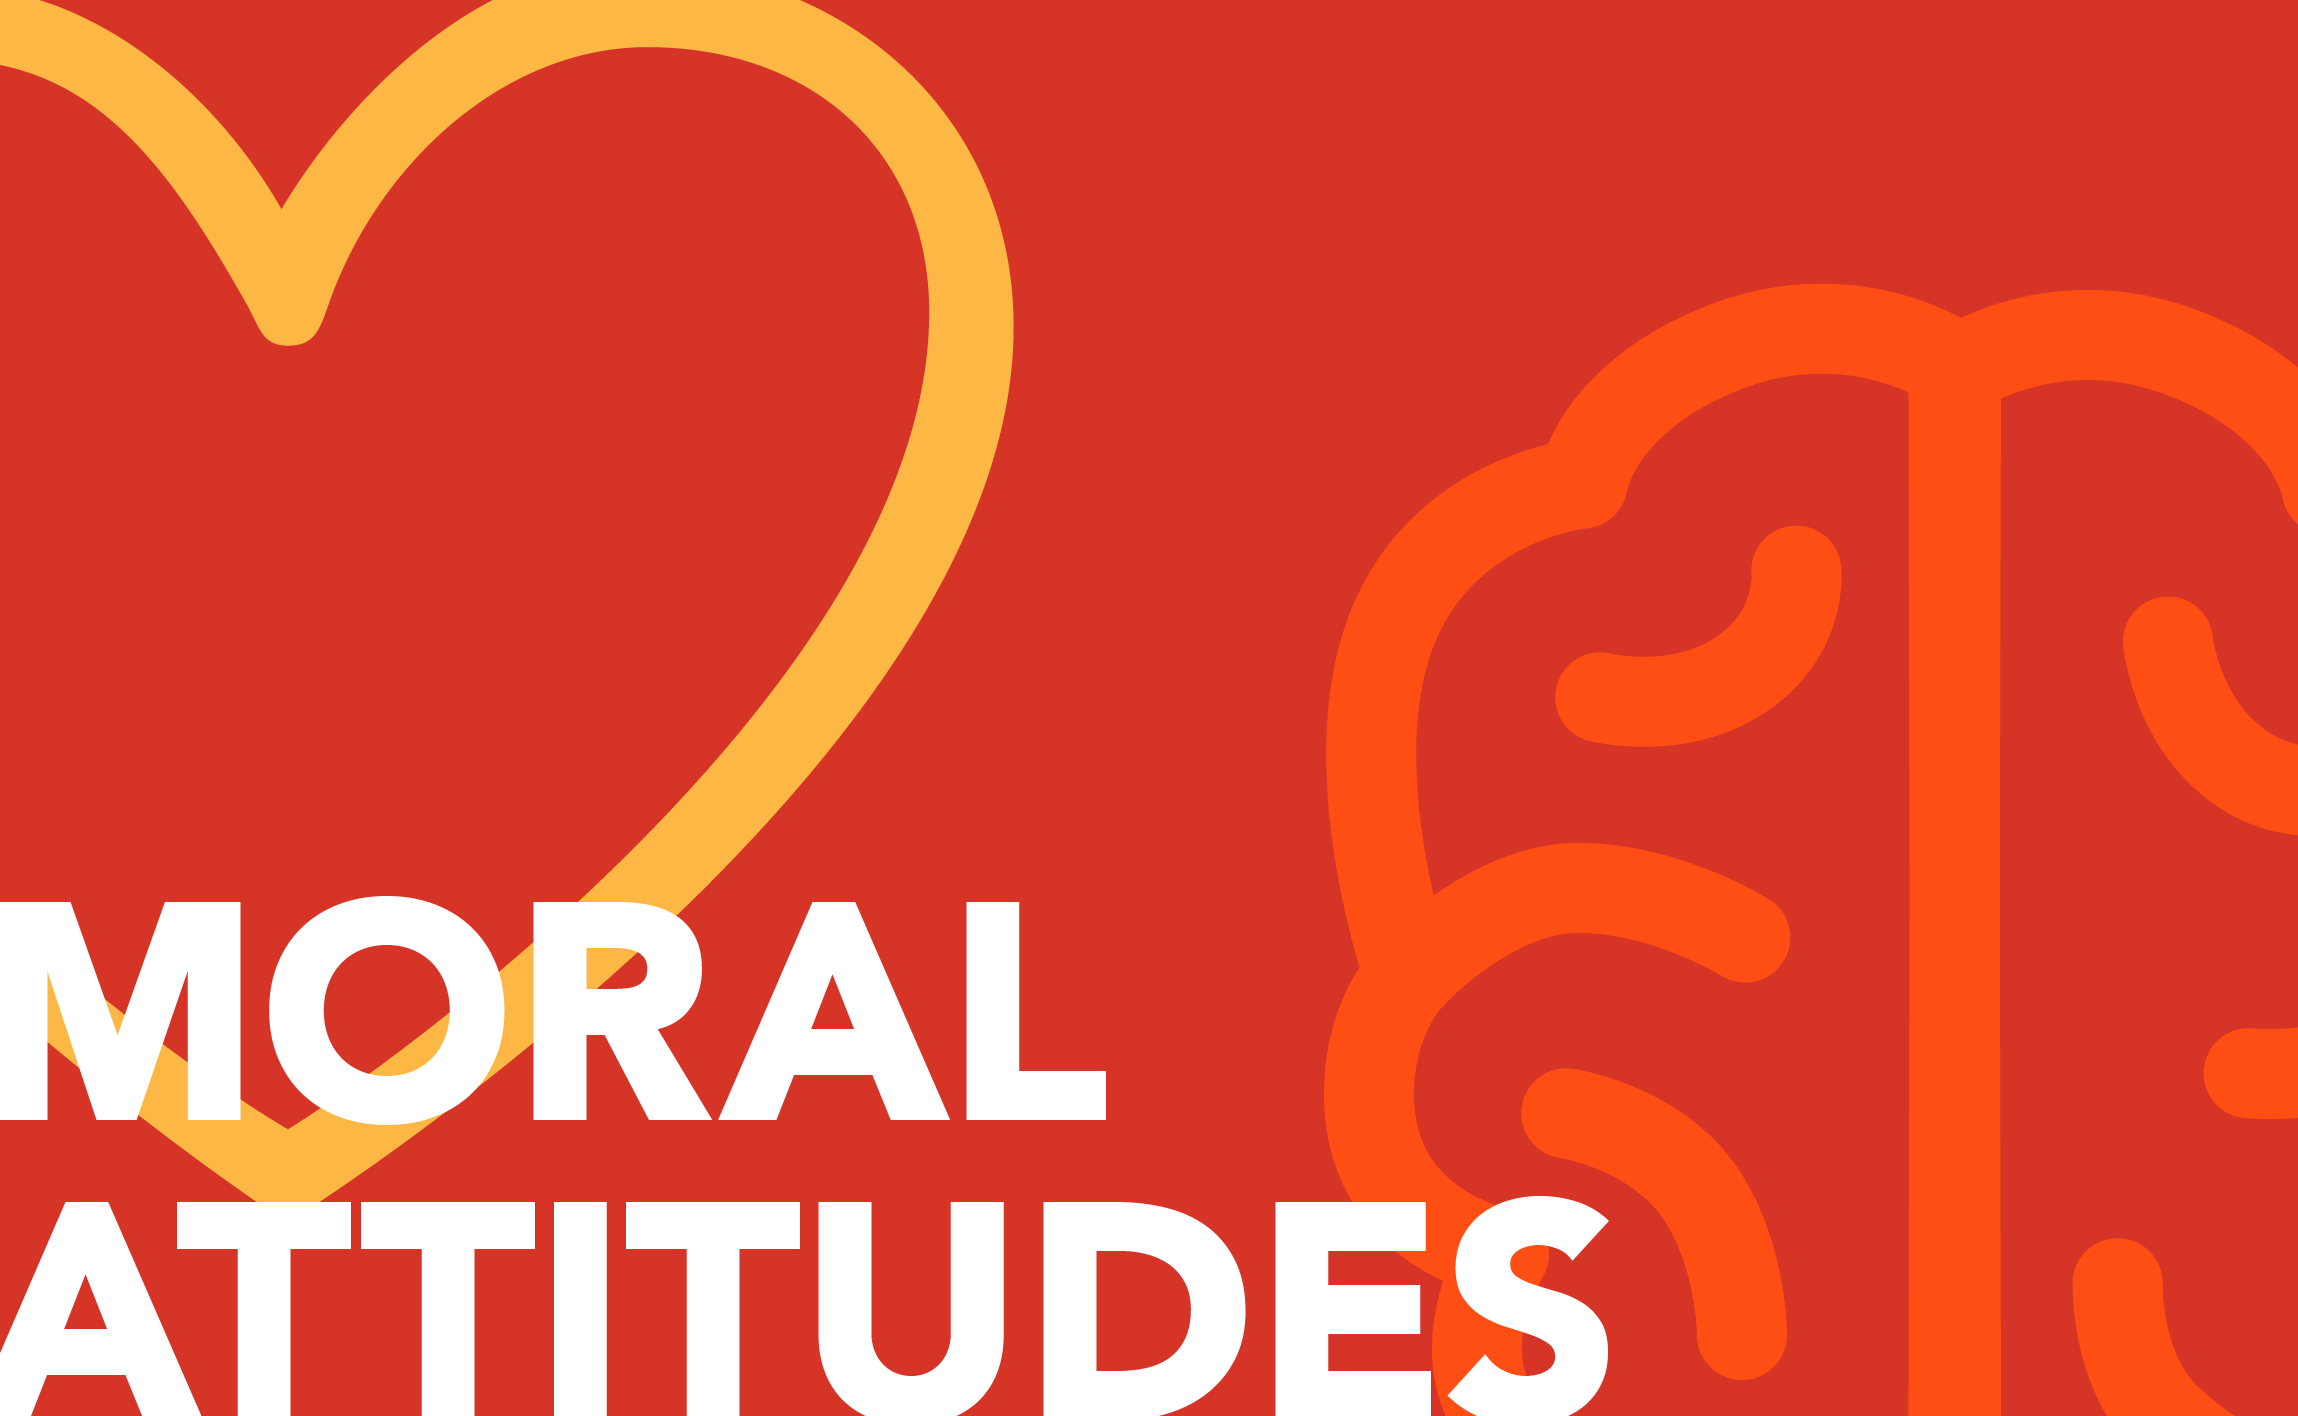 Decorative tile for "Moral Attitudes" program